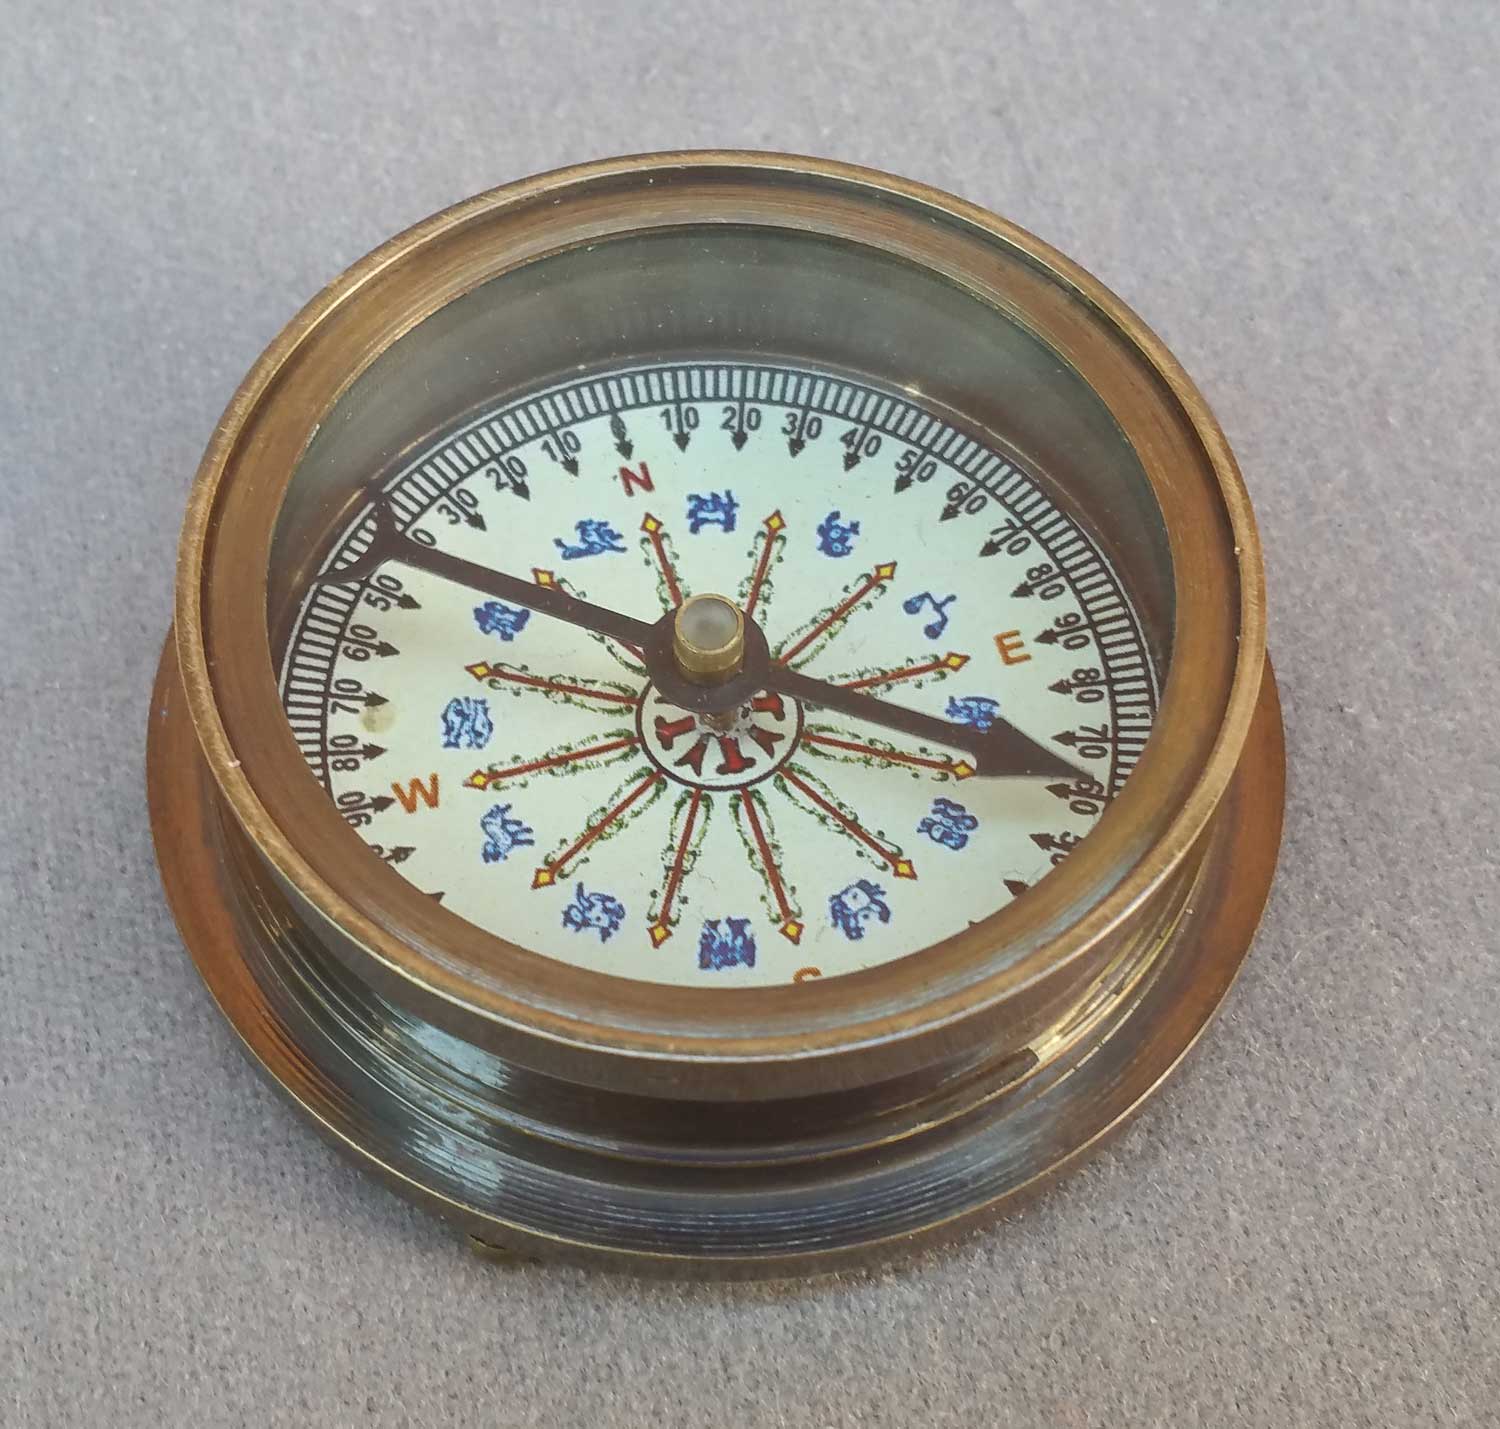 Compass with Century Calendar